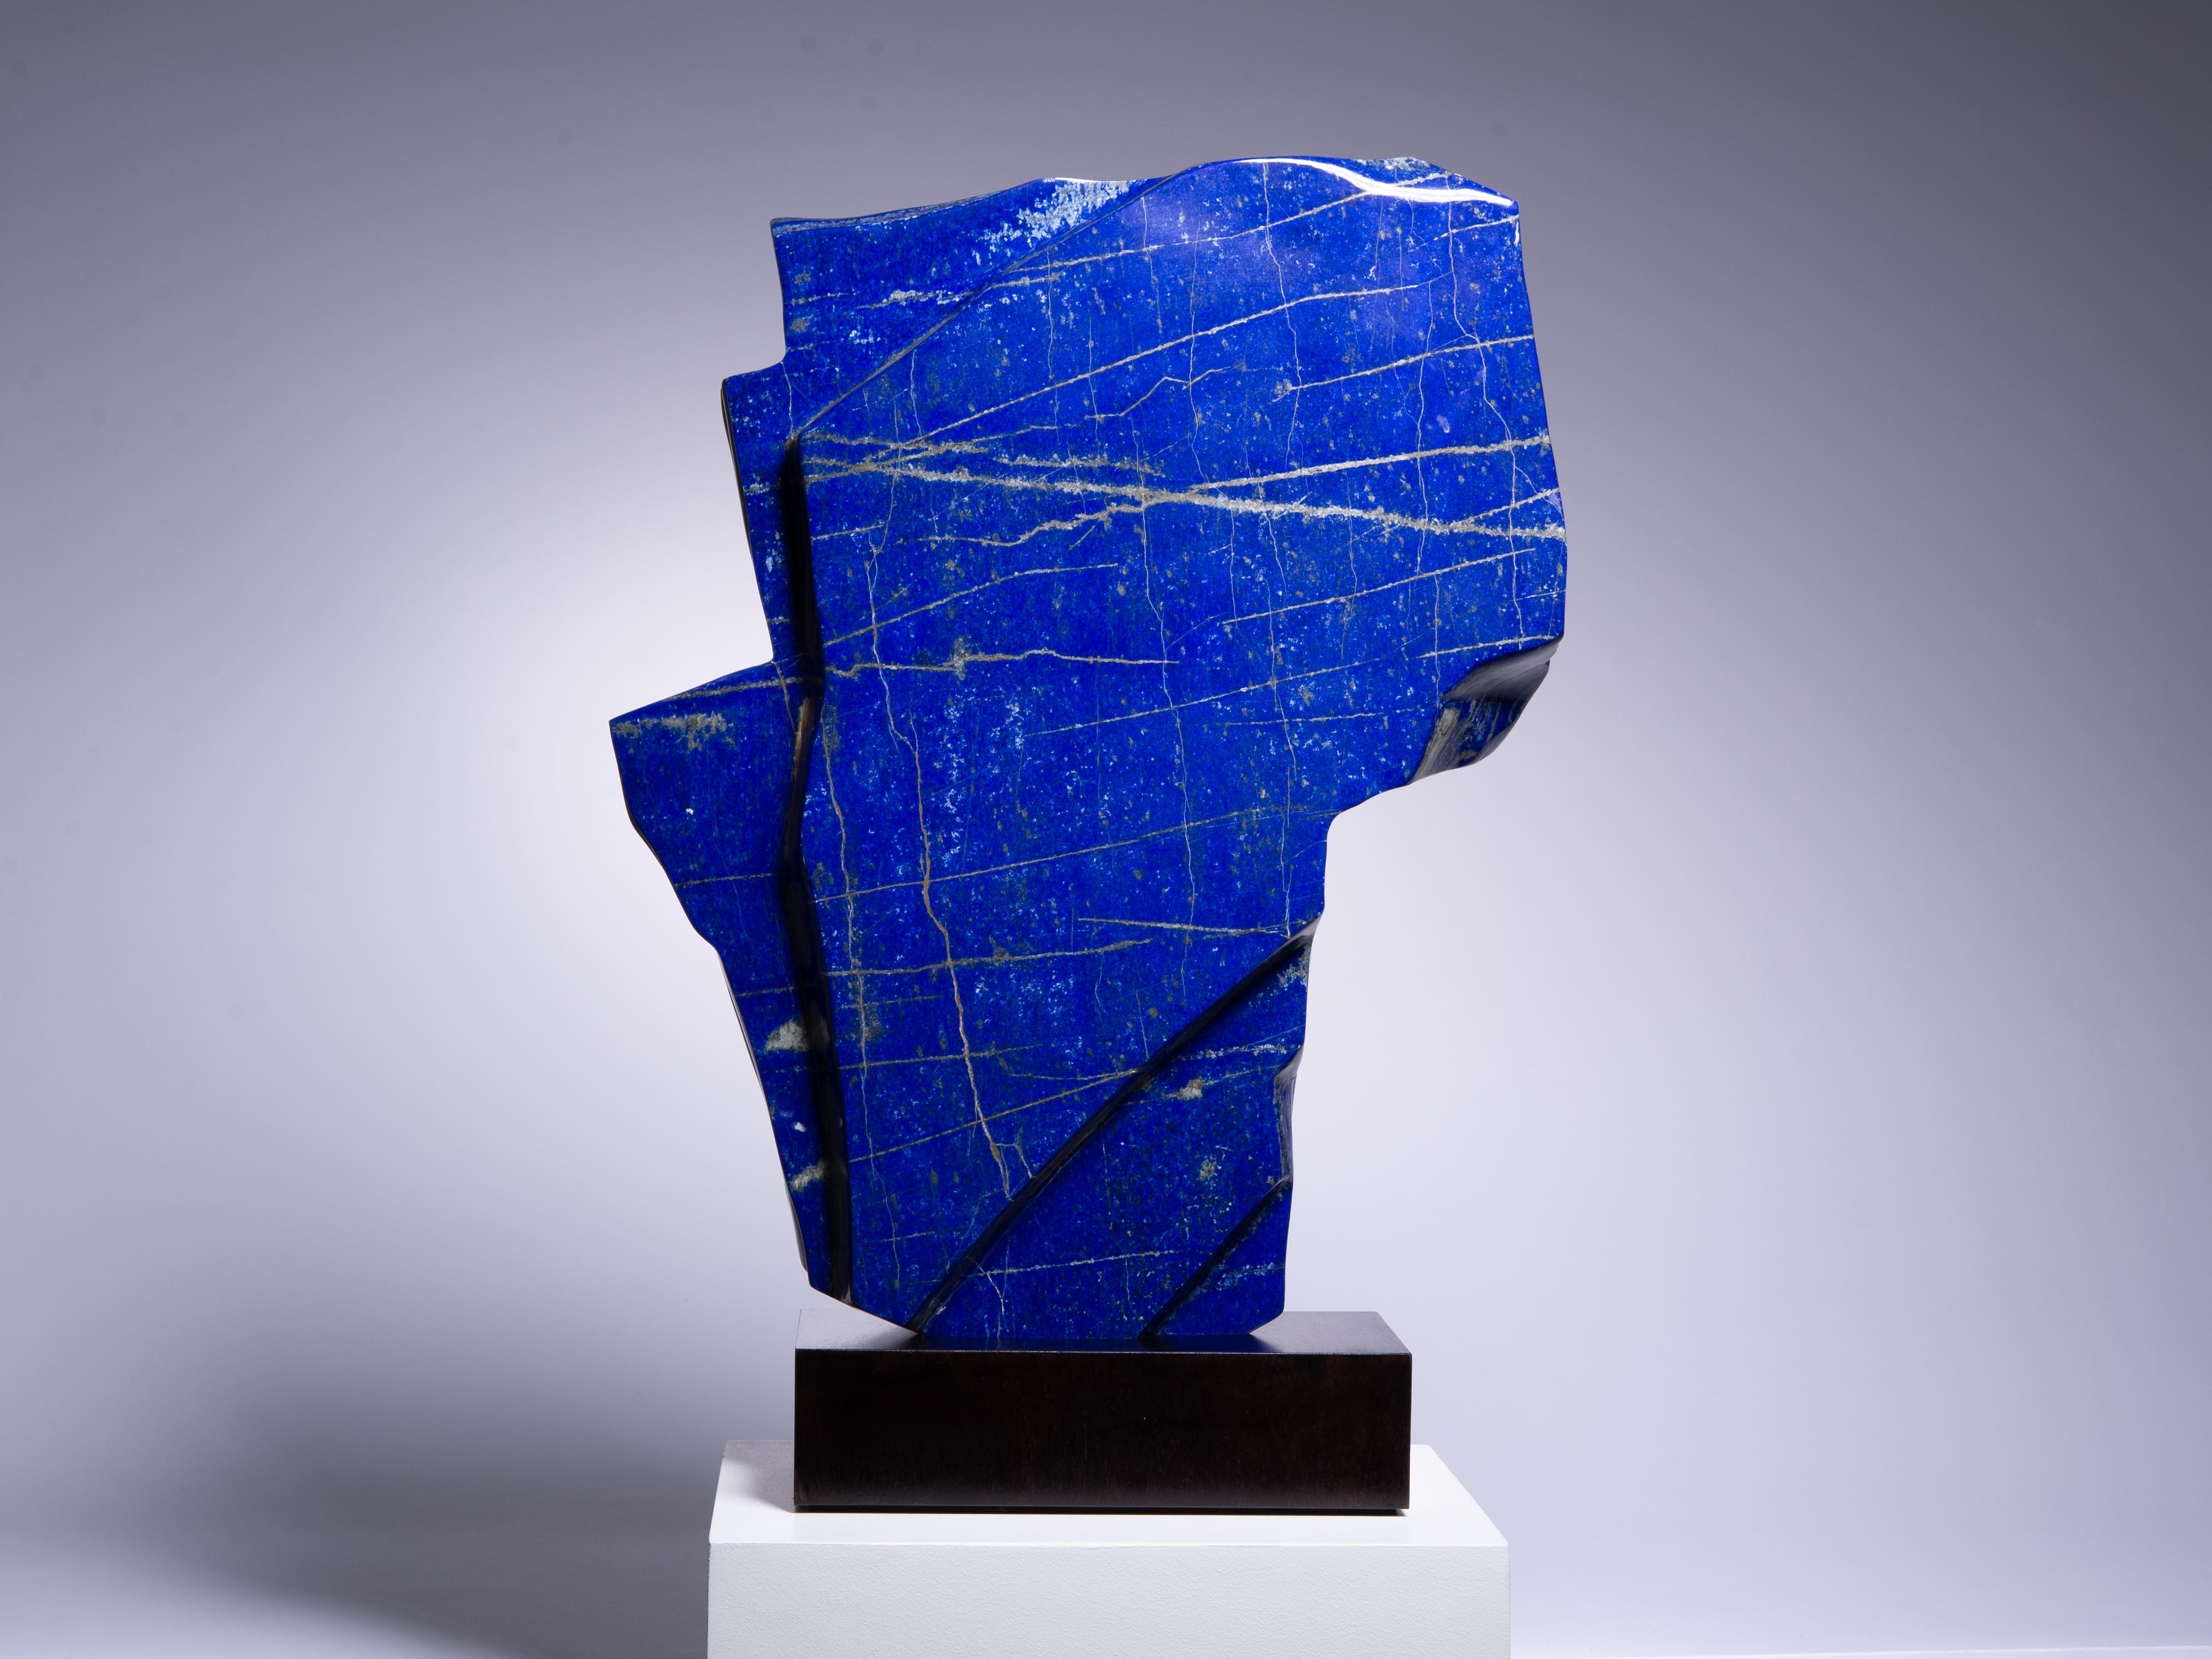 Afghan Large Perfect Piece of Blue Azure Lapis Lazuli